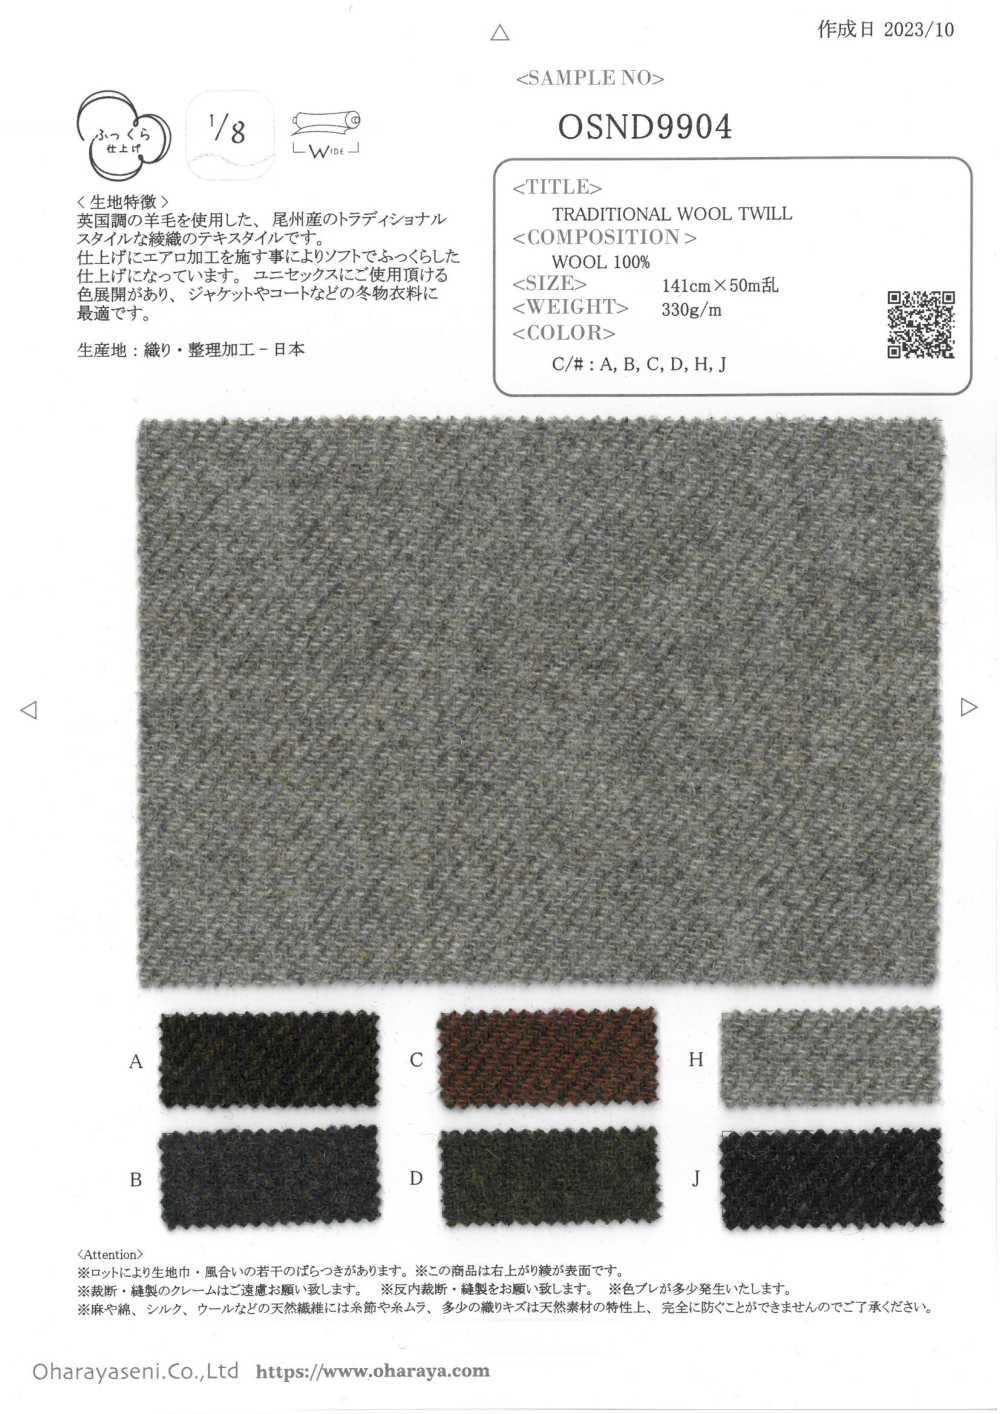 OSND9904 TRADITIONAL WOOL TWILL[Textile / Fabric] Oharayaseni